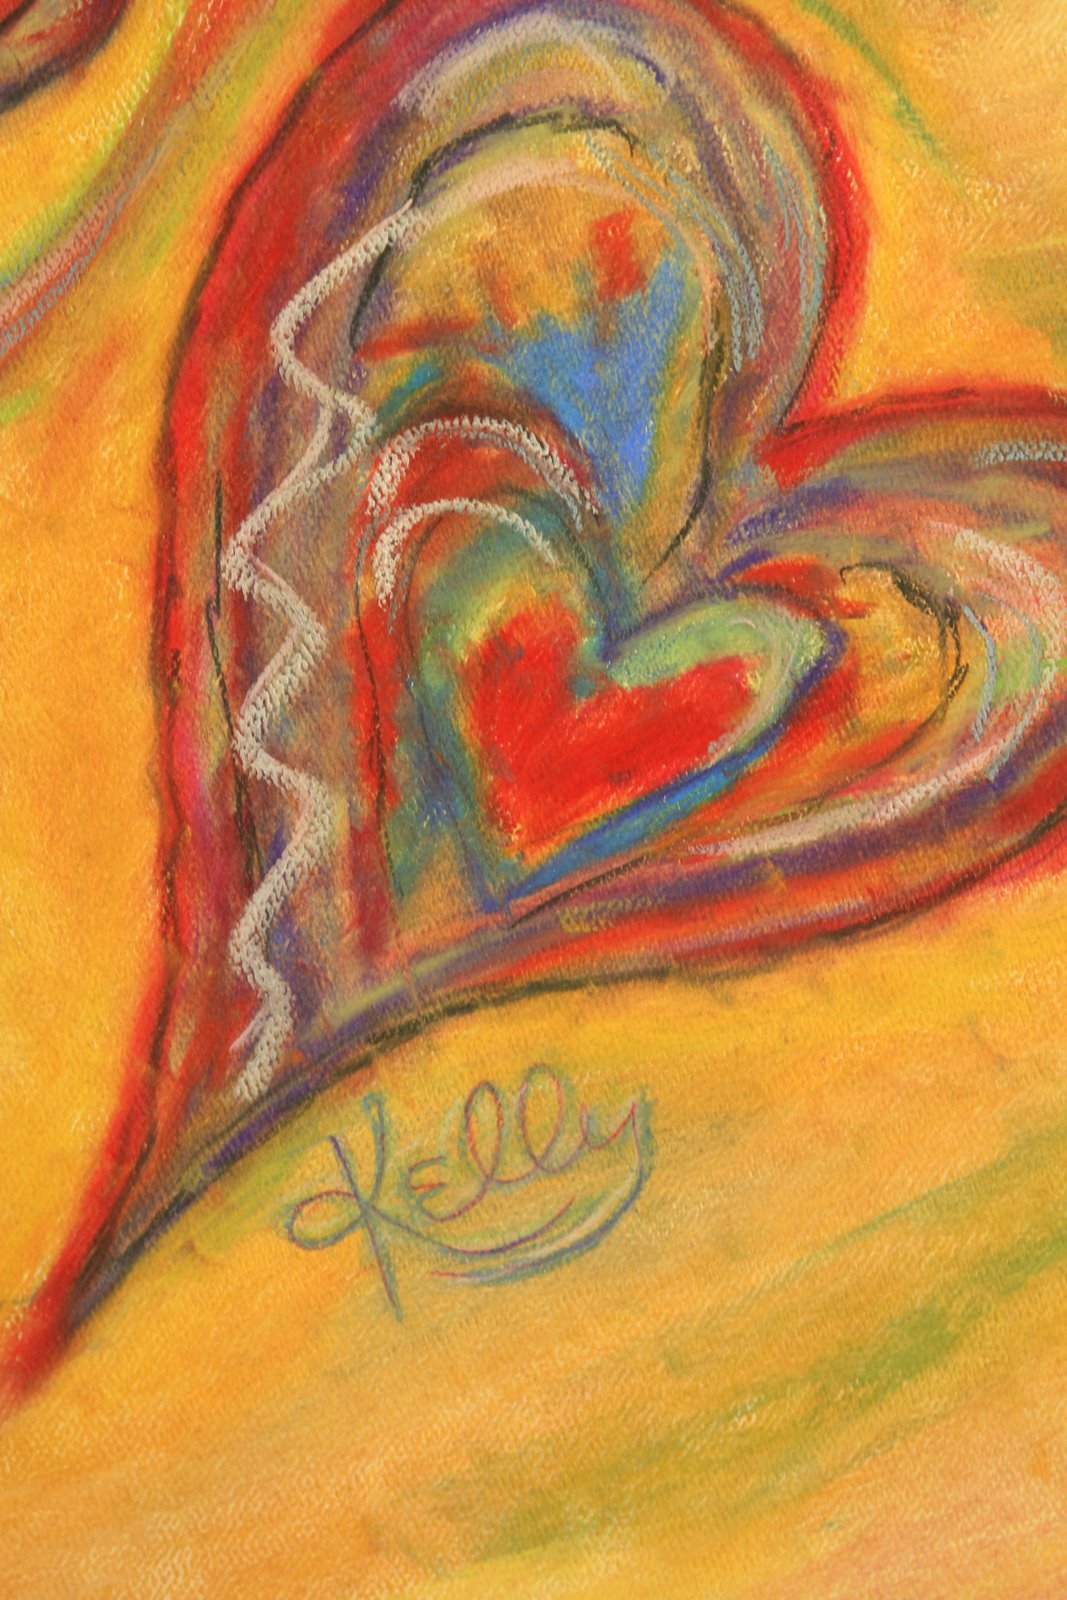 [(c)2007mydancingheart.com+Kelly+Heart-1.jpg]